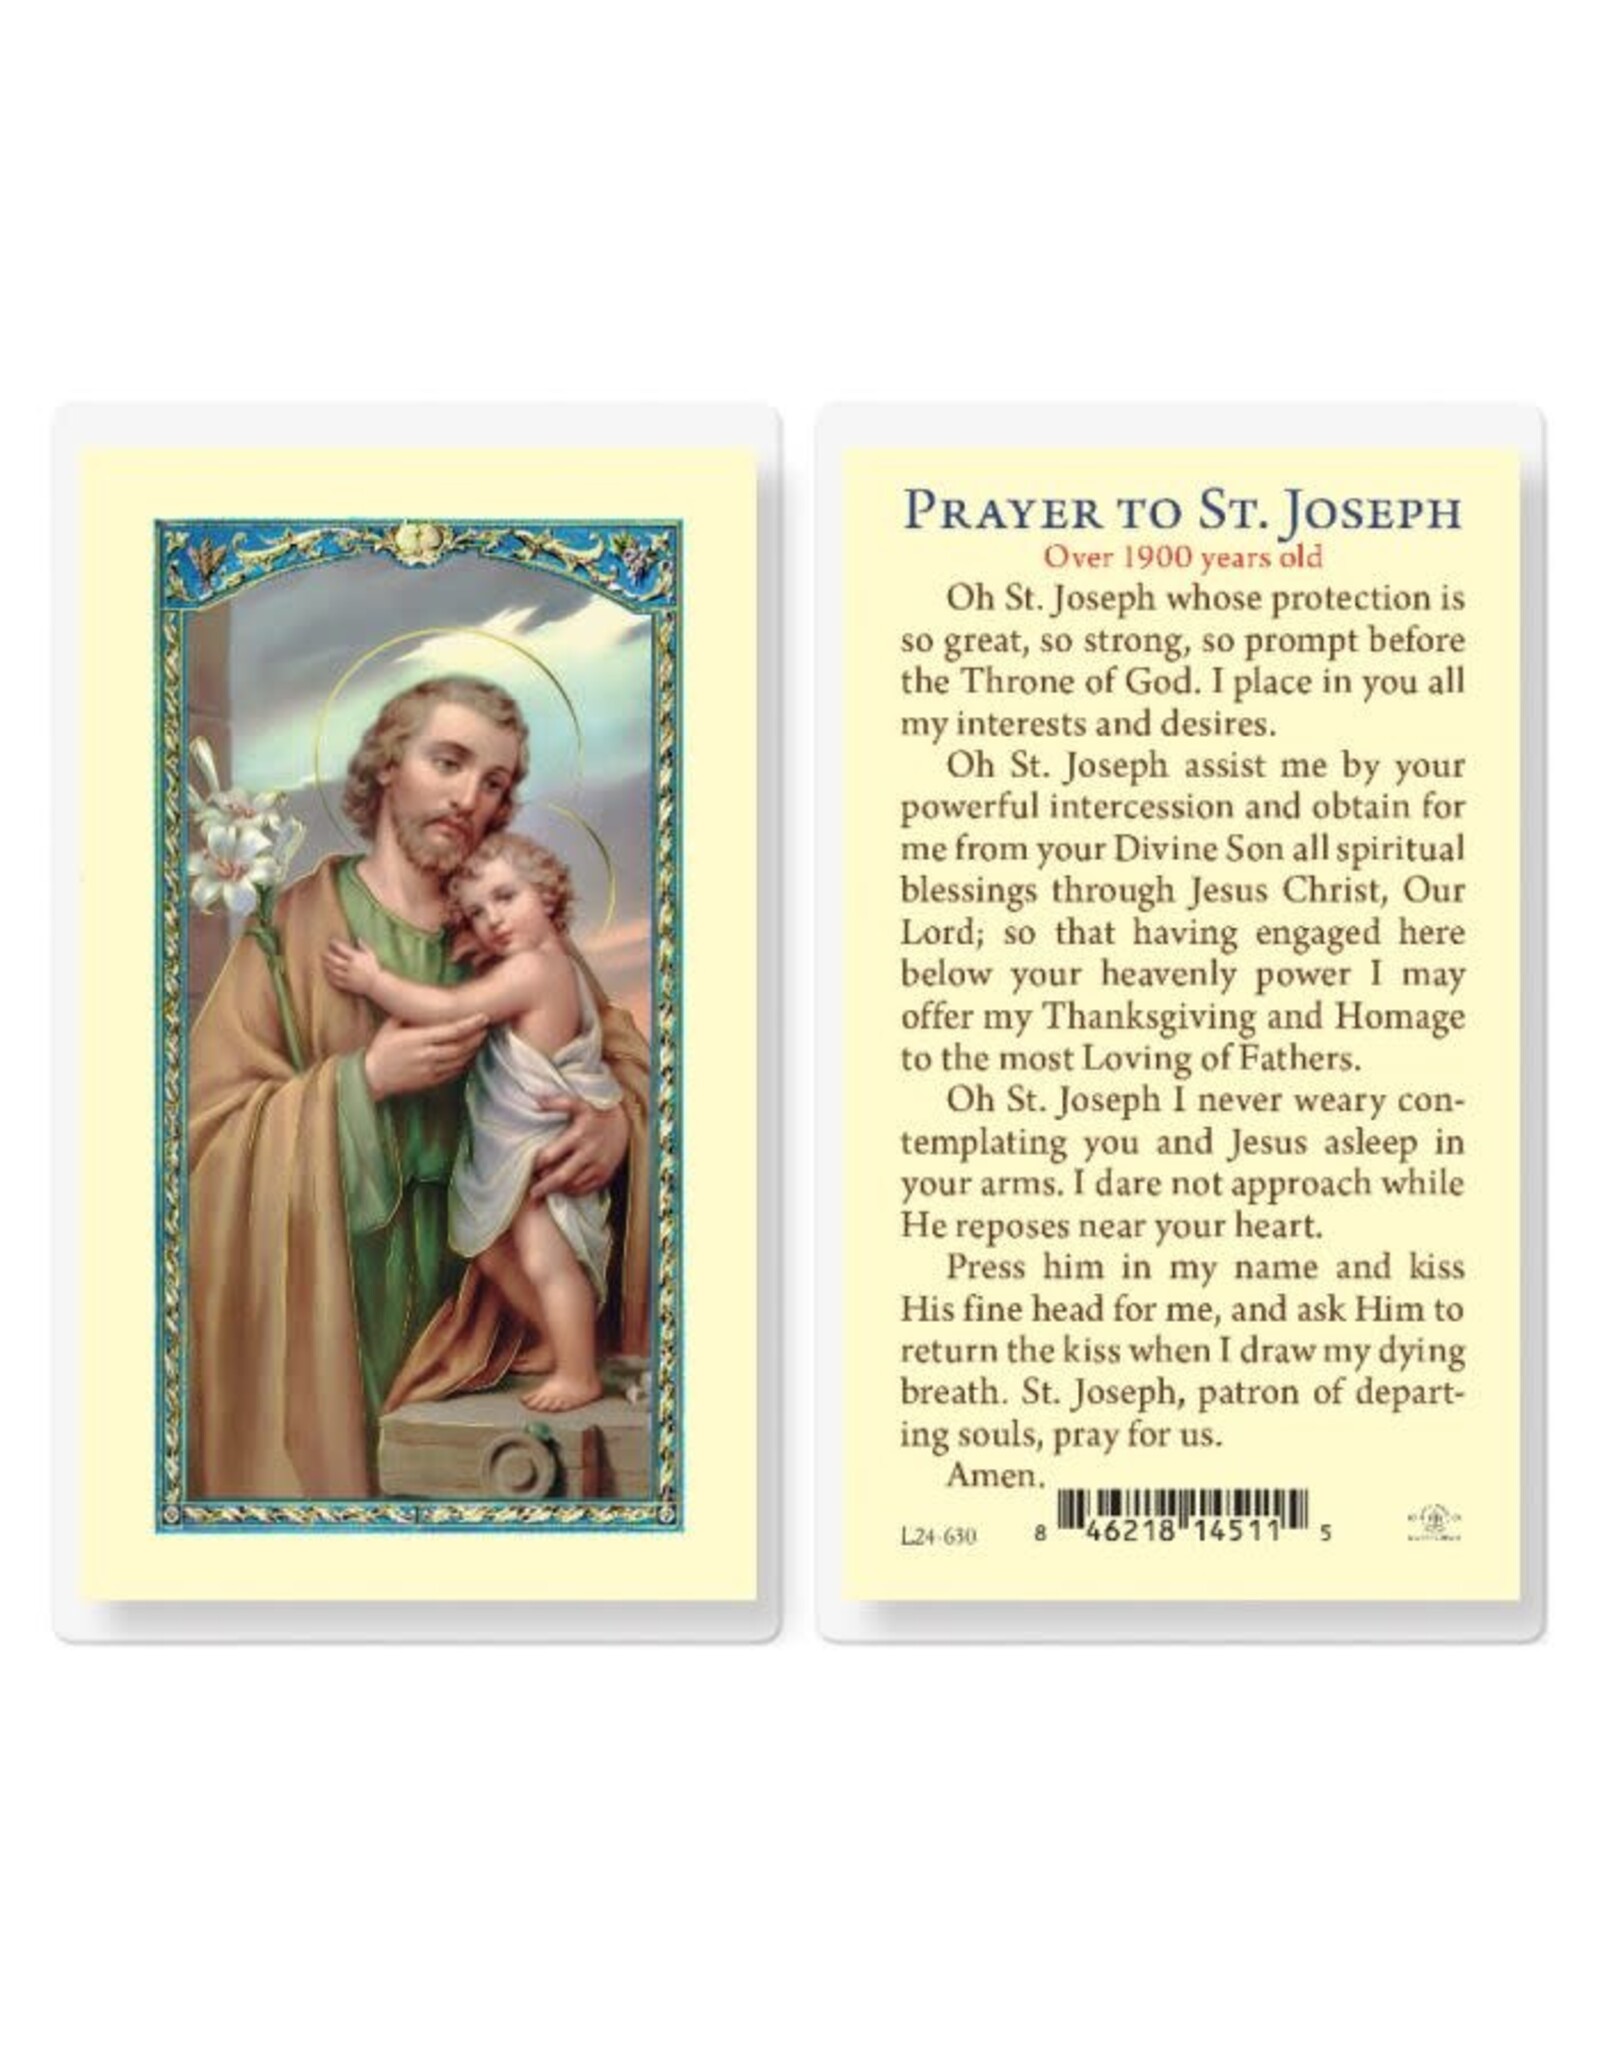 Hirten Holy Card, Laminated - St. Joseph Over 1900 Years Old